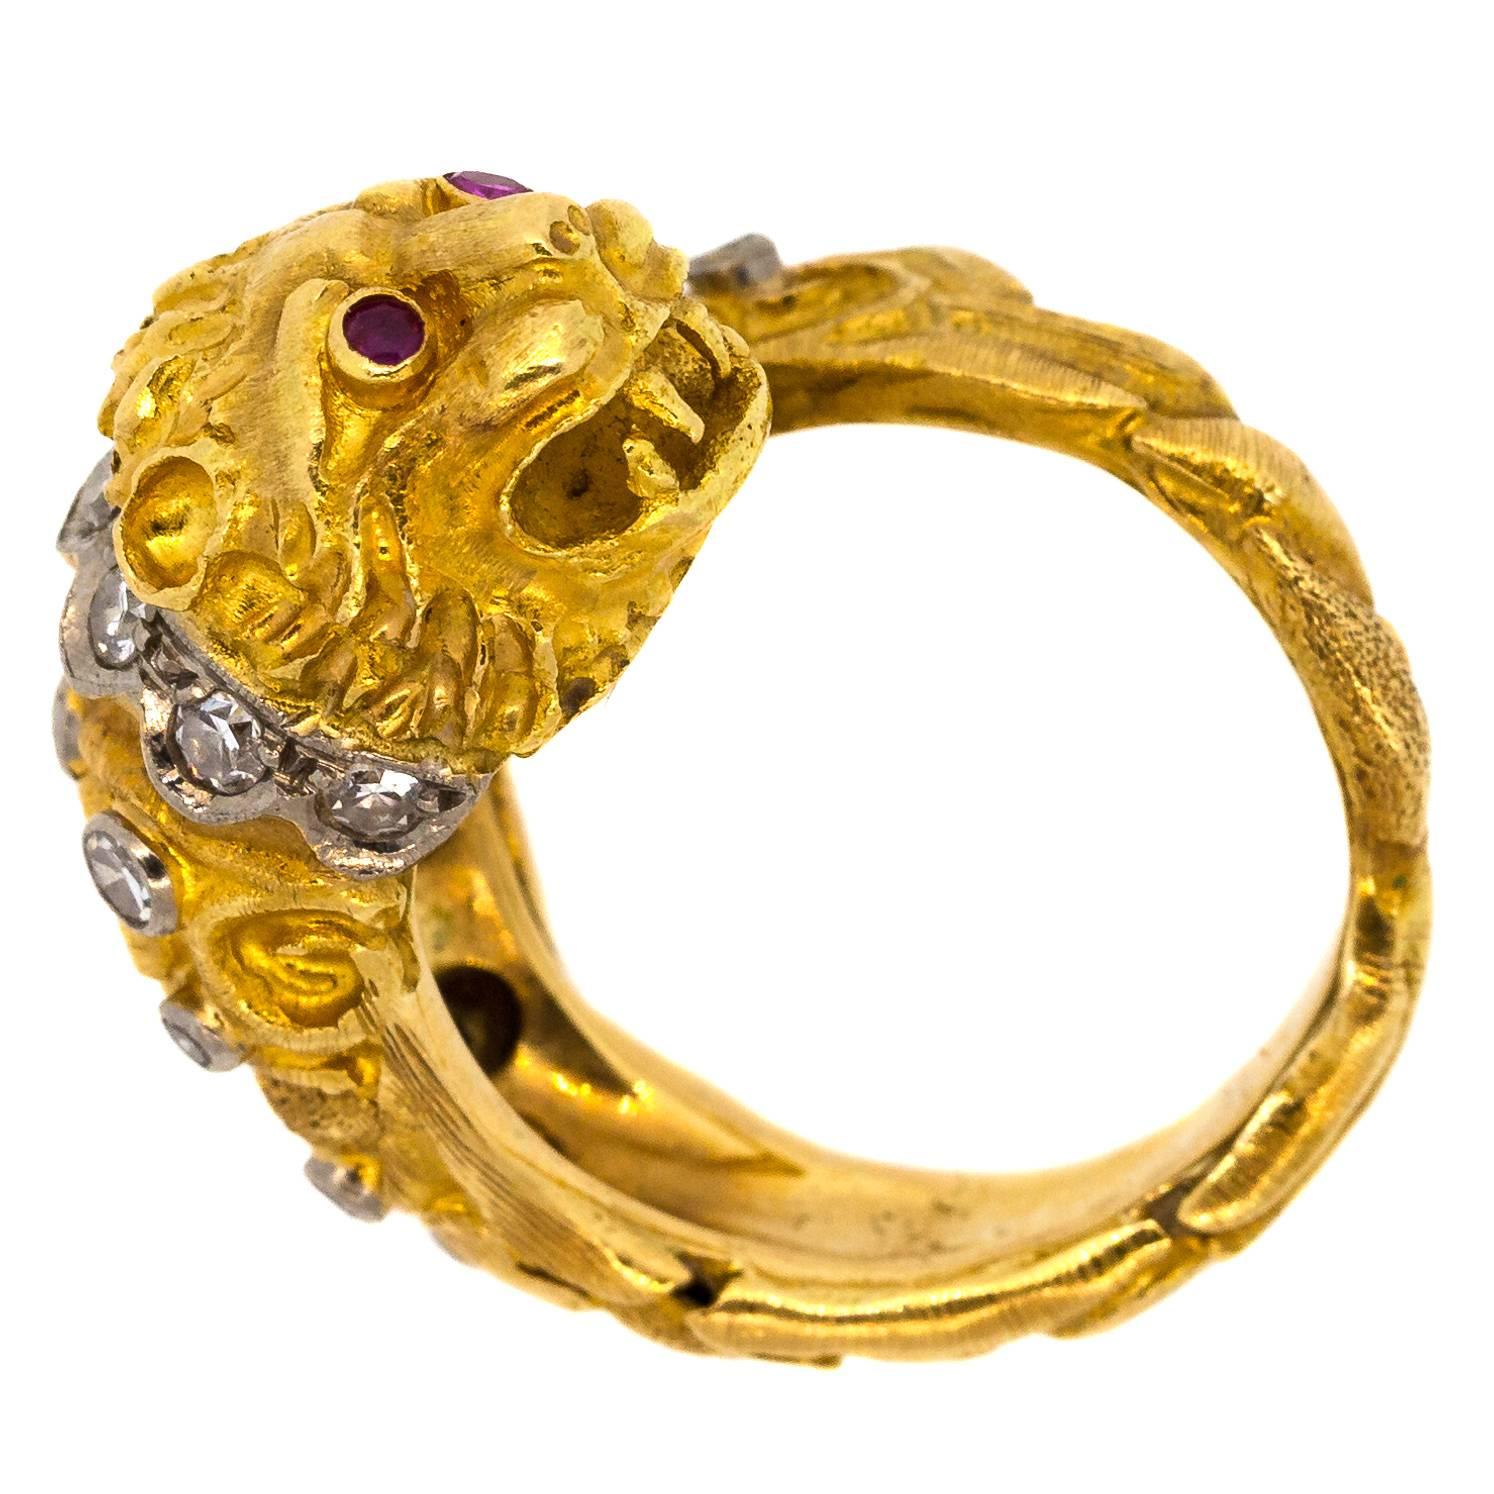 Zolotas-Greece Diamond Gold Lion Head Ring